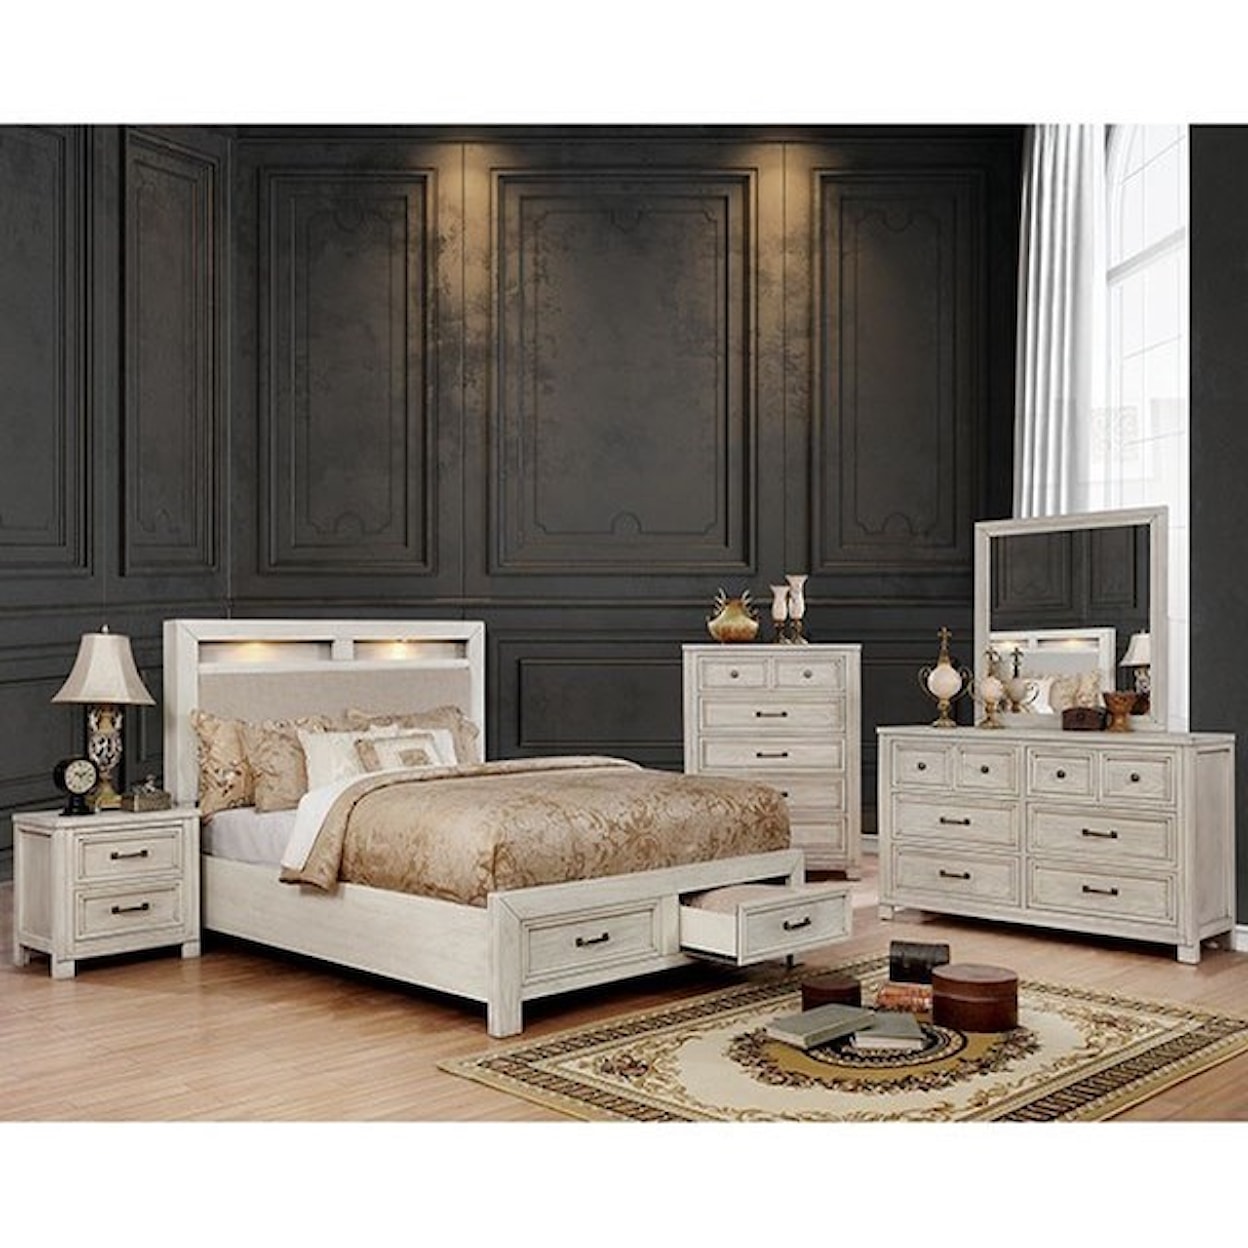 Furniture of America Tywyn Queen Bedroom Group